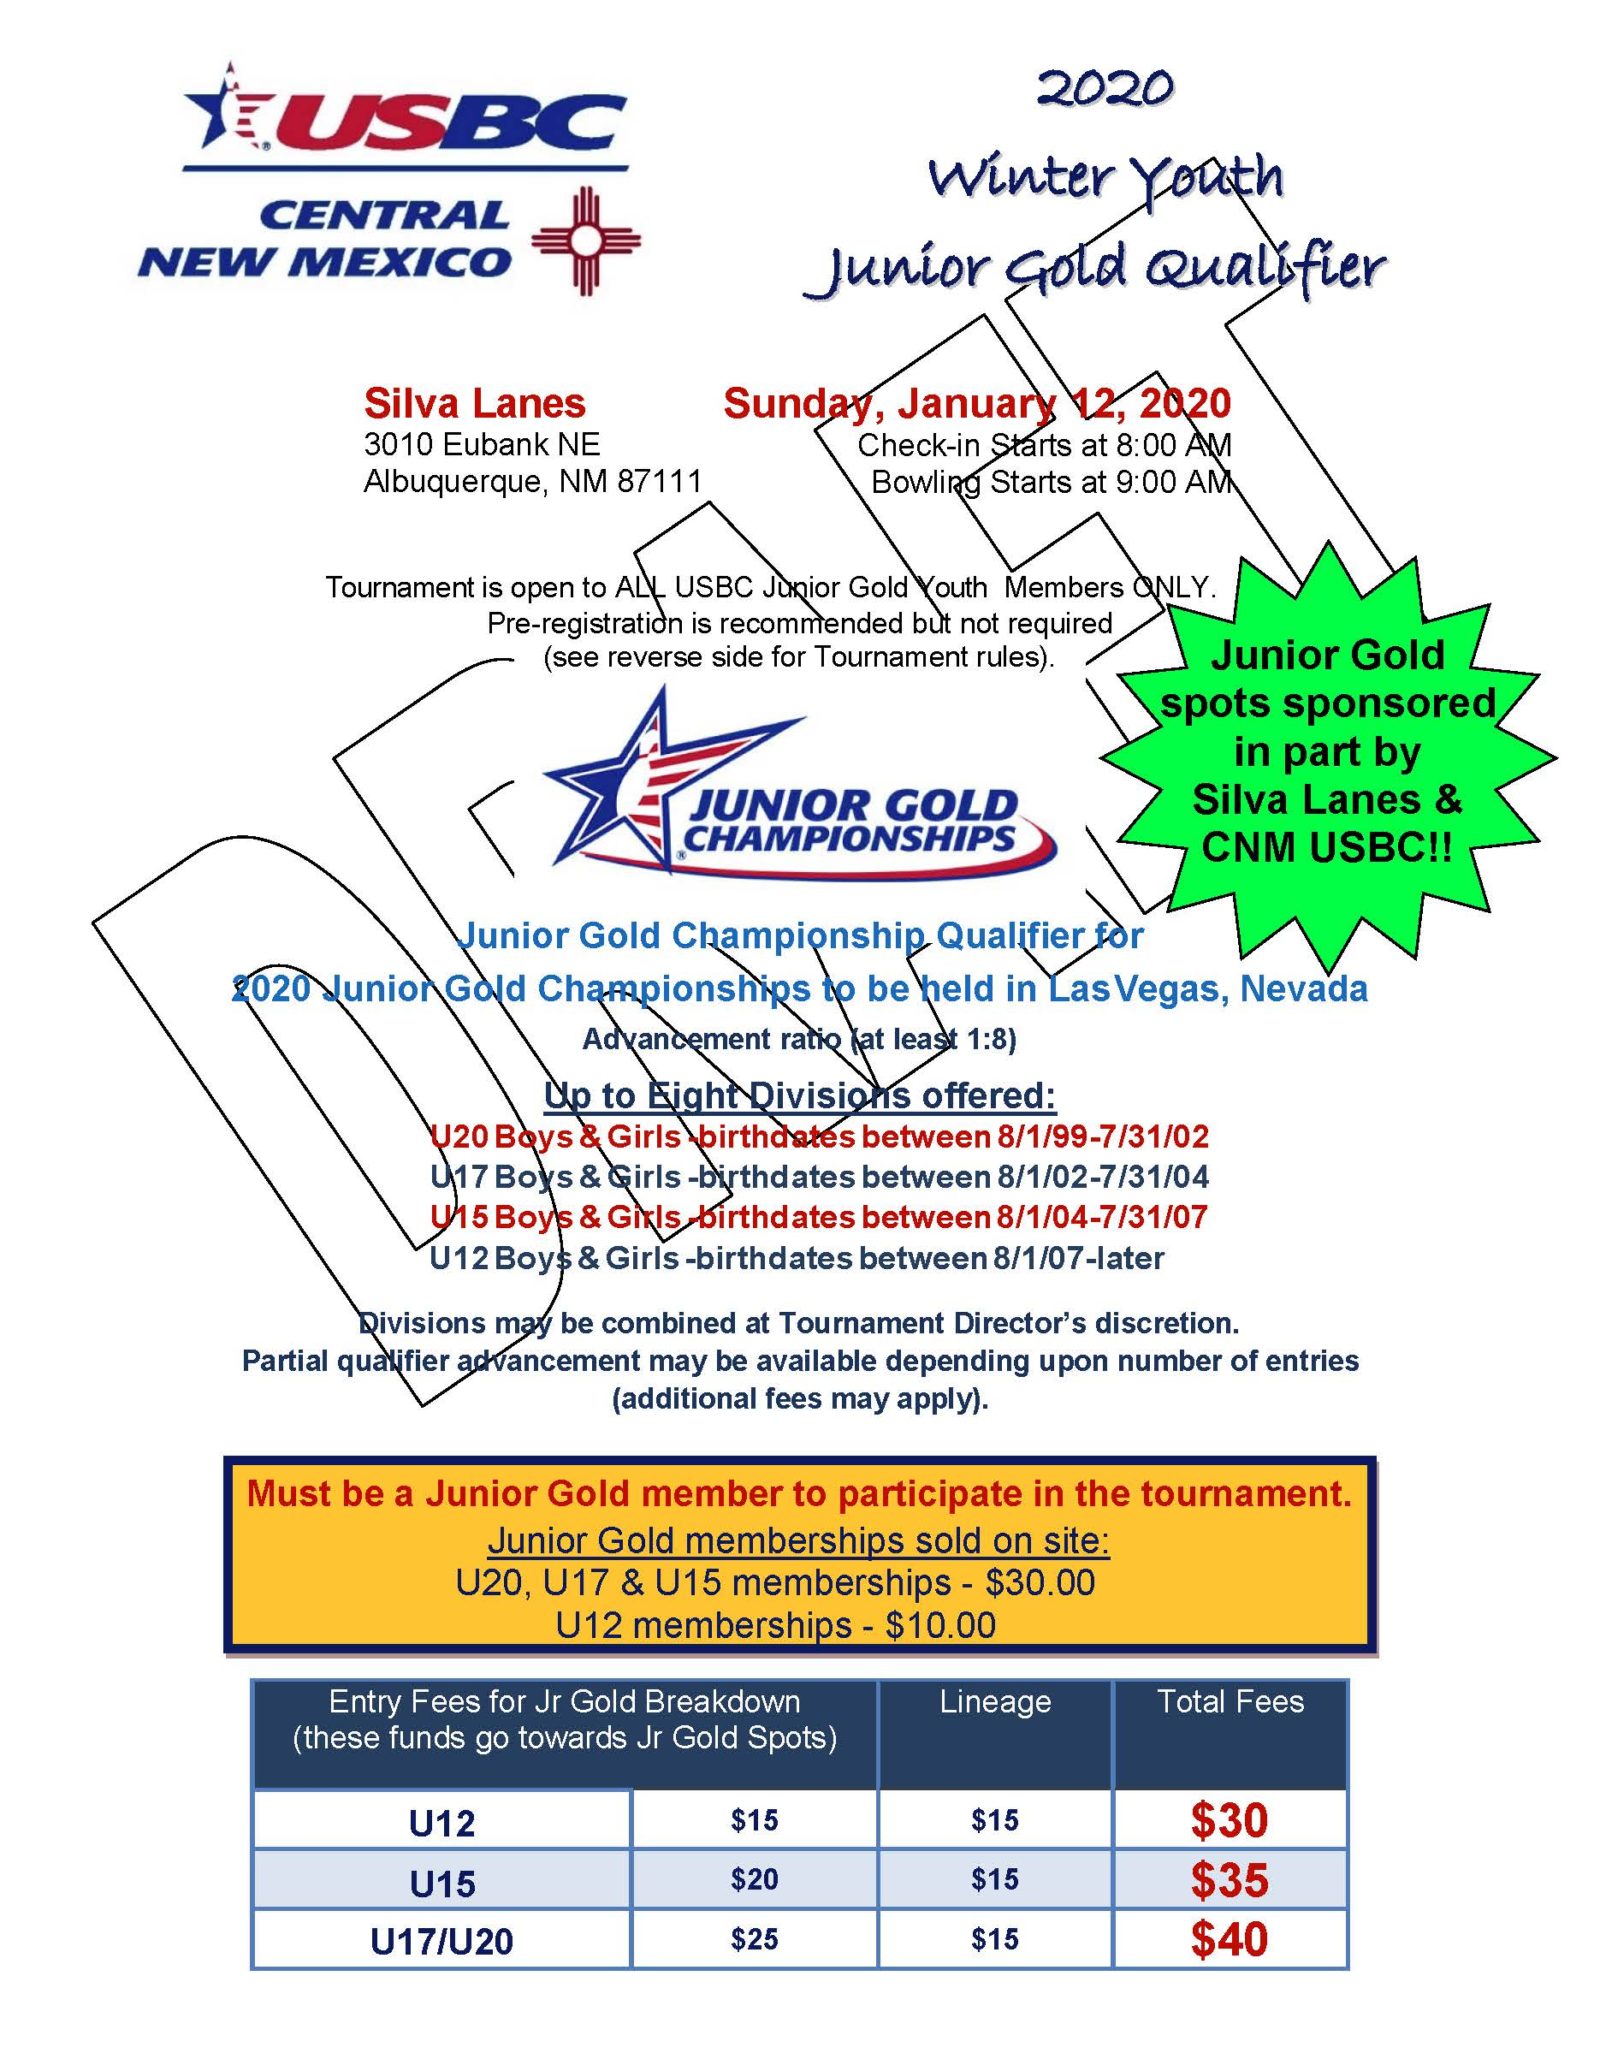 2020 Winter Youth Junior Gold Qualifier CNM USBC